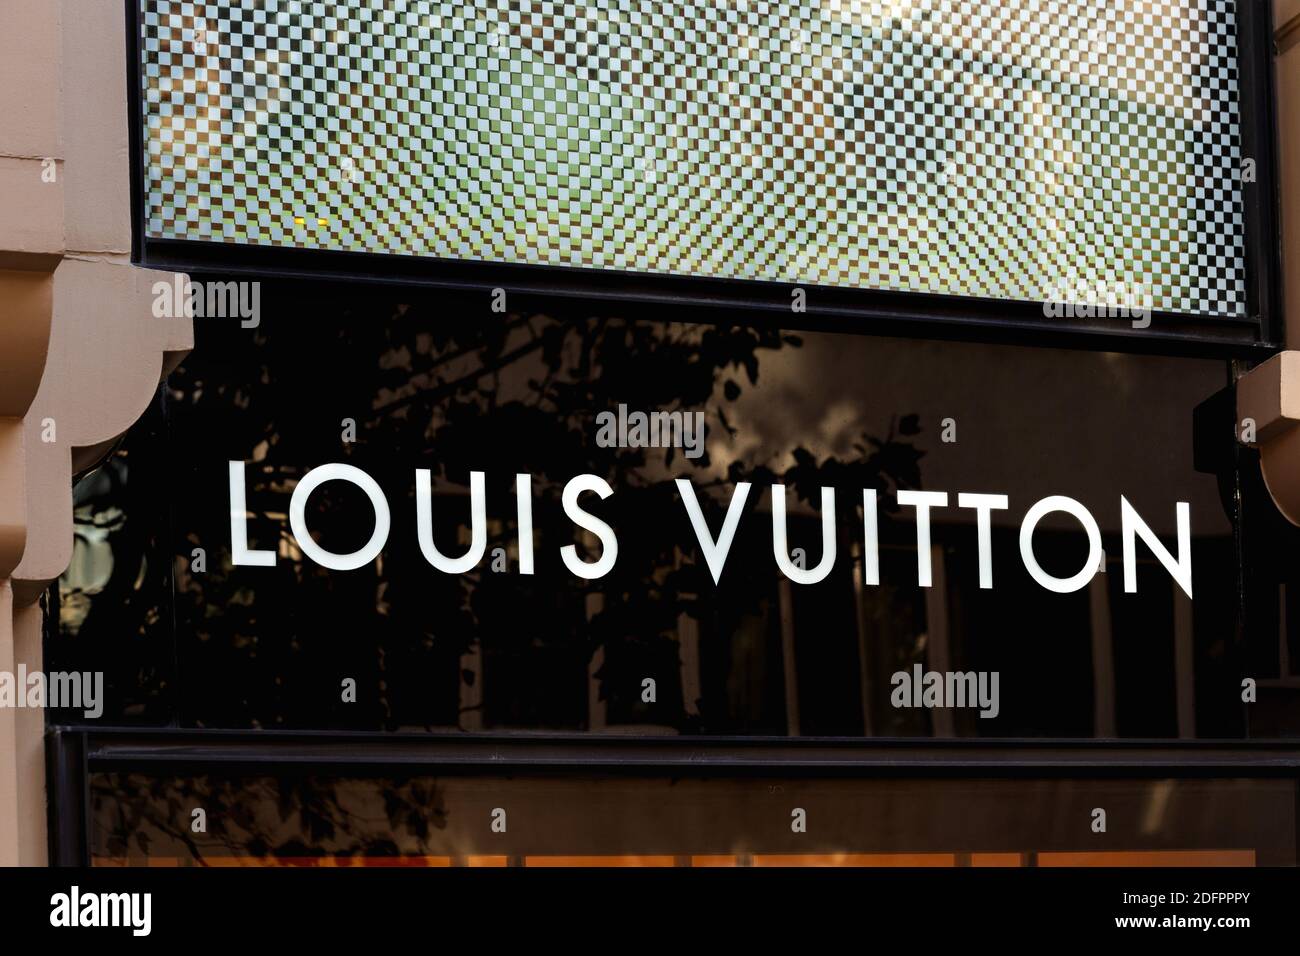 Louis Vuitton Fashion Store Façade in Nisantasi. Nisantasi, Turkey. Stock Photo